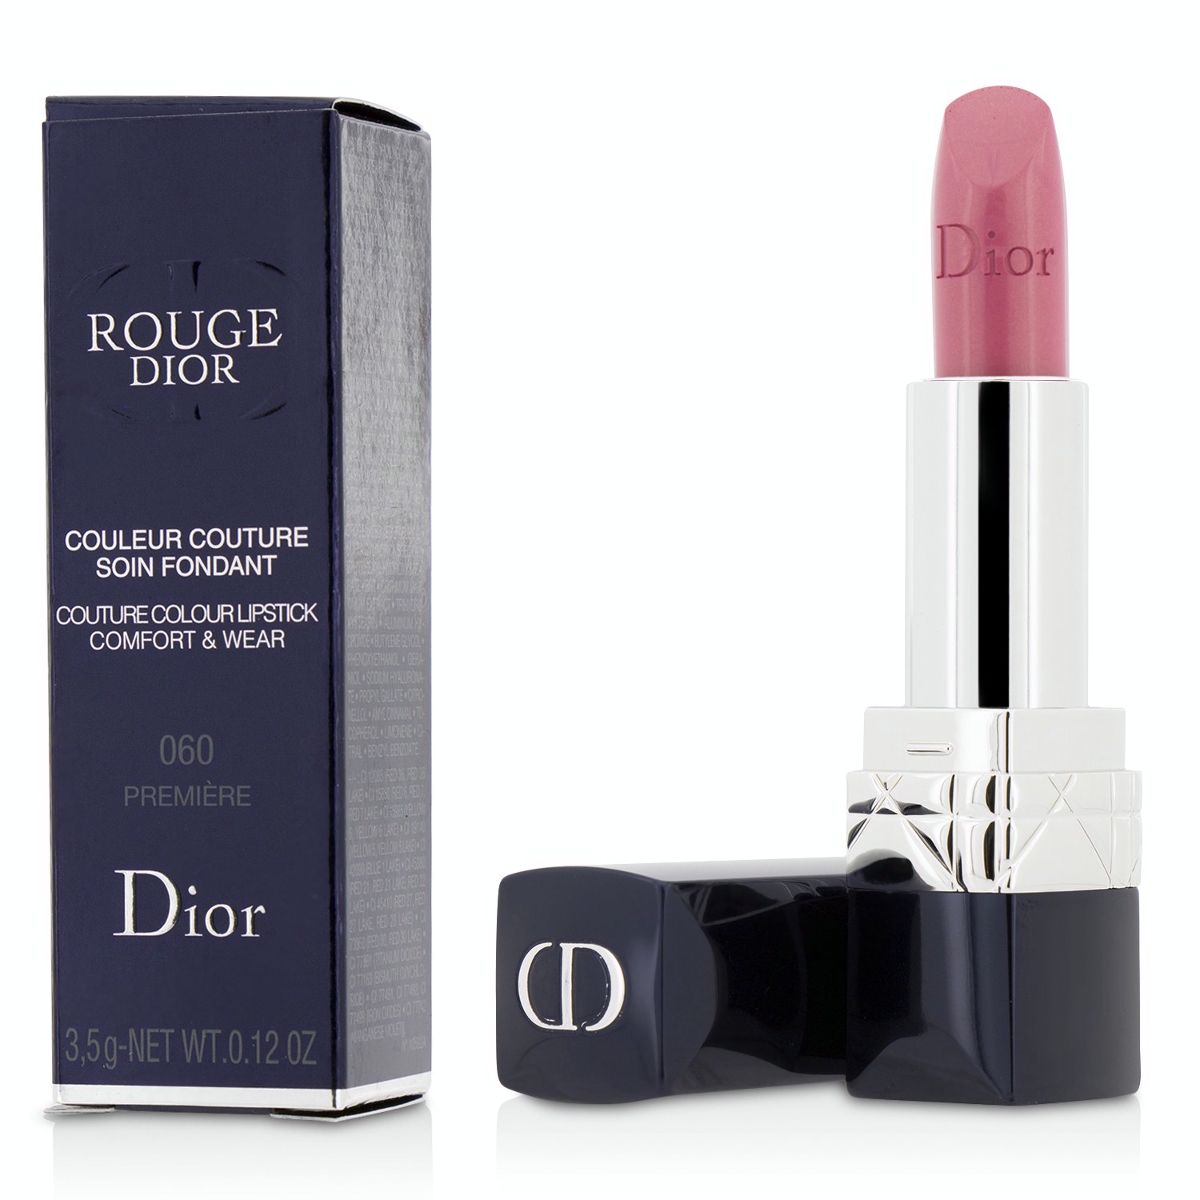 Rouge Dior Couture Colour Comfort  Wear Lipstick - # 060 Premiere Christian Dior Image